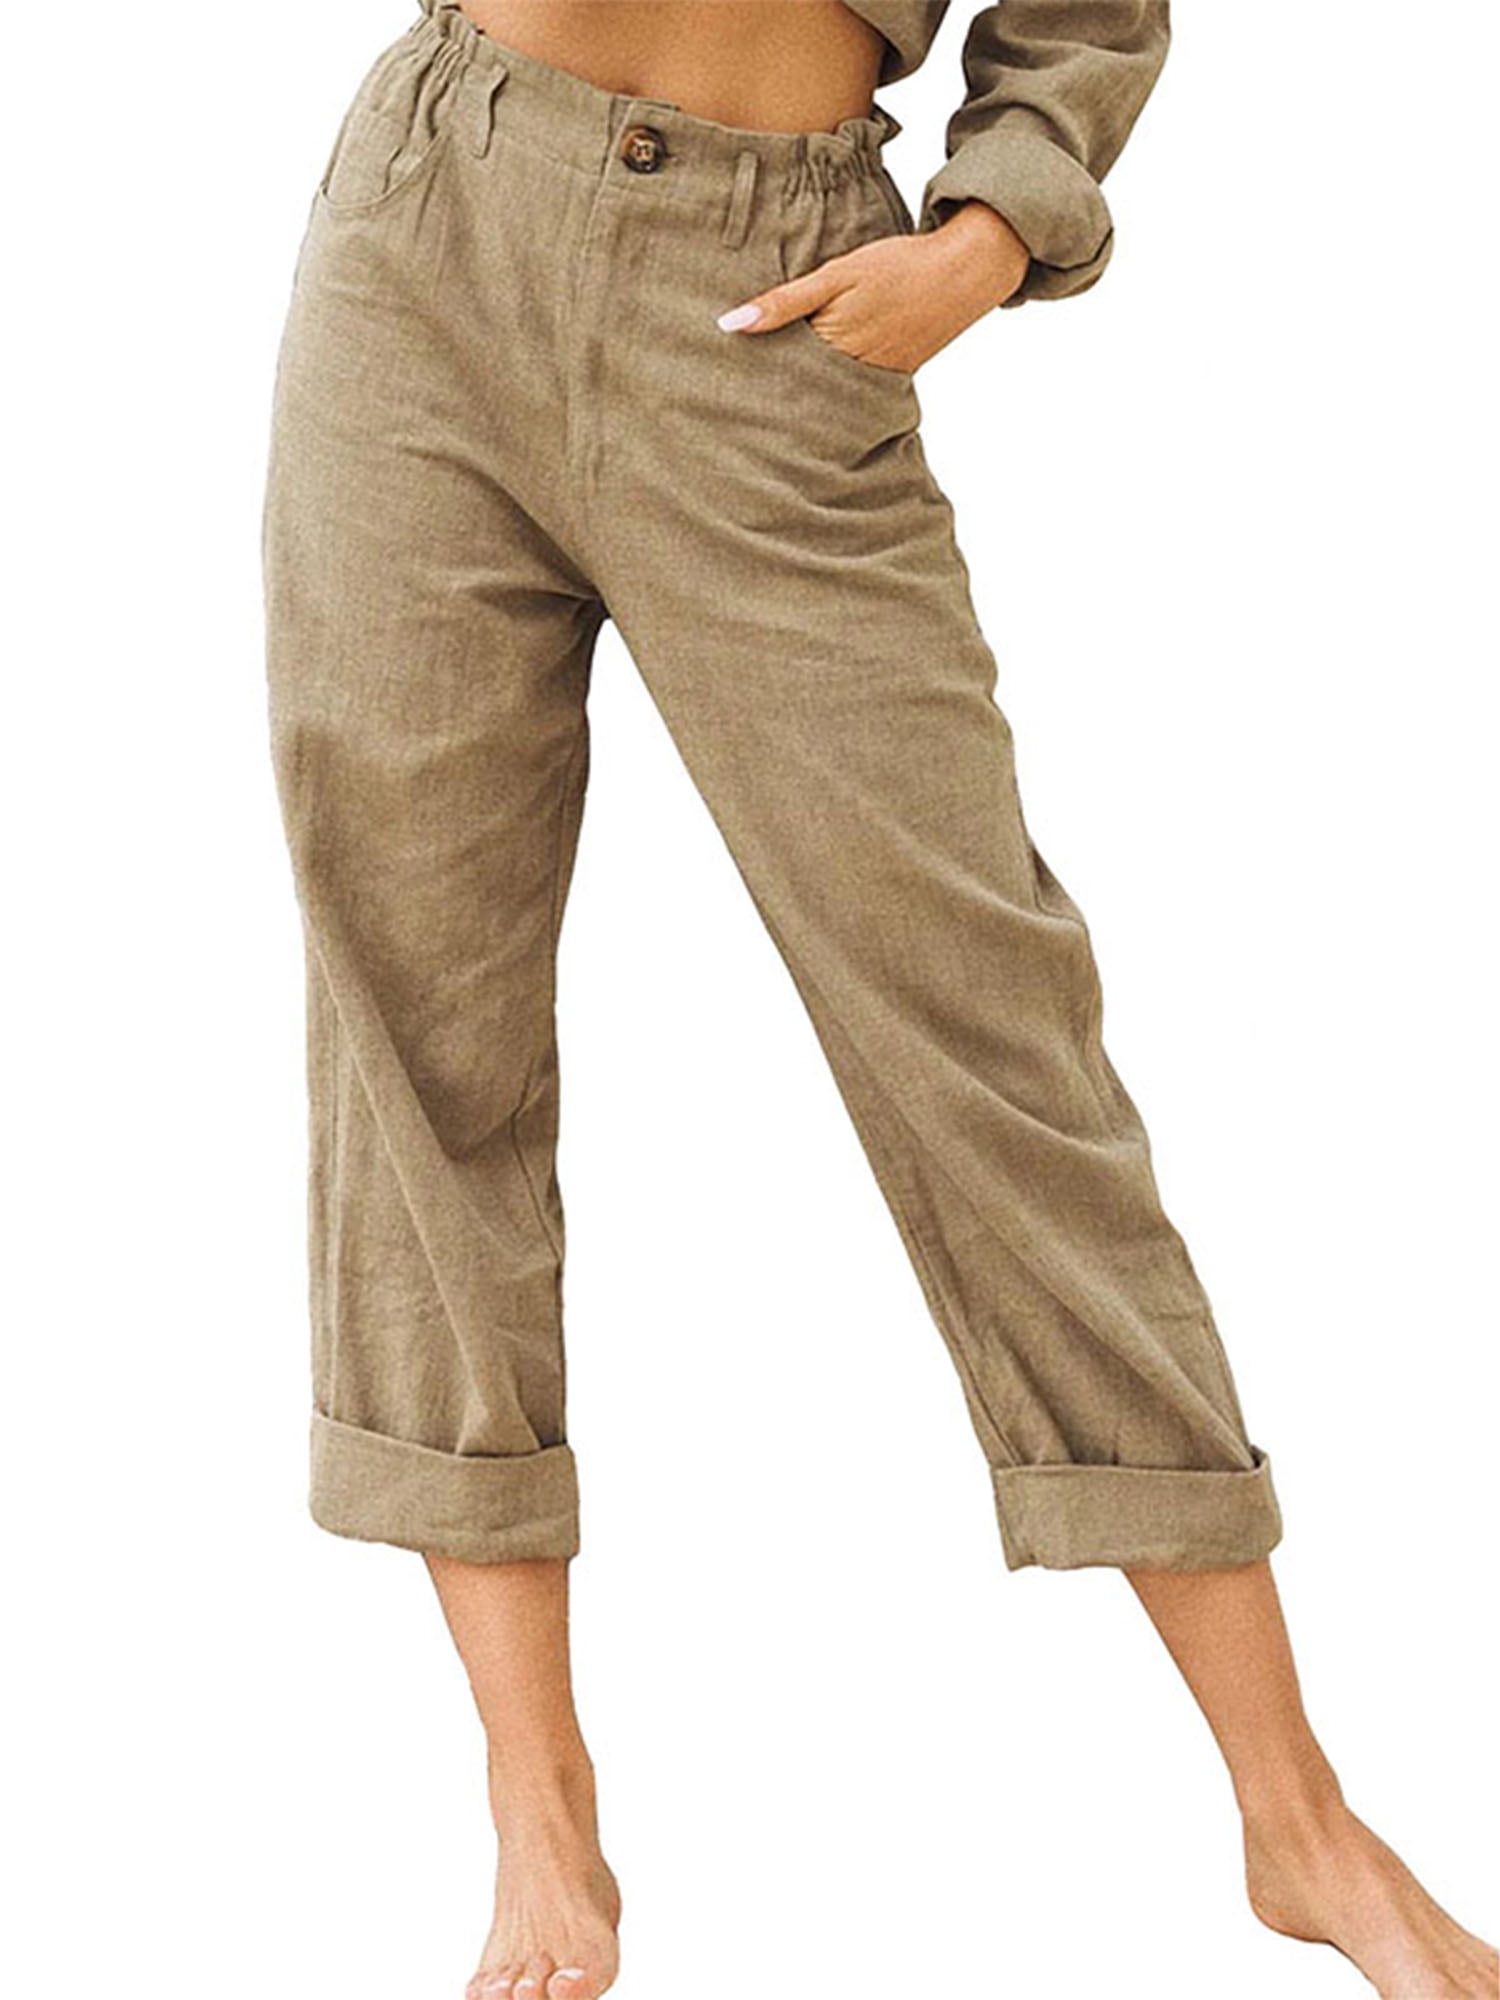 Lumento Women Casual Cotton Linen Pants Elastic Waist Relaxed Fit Pants ...